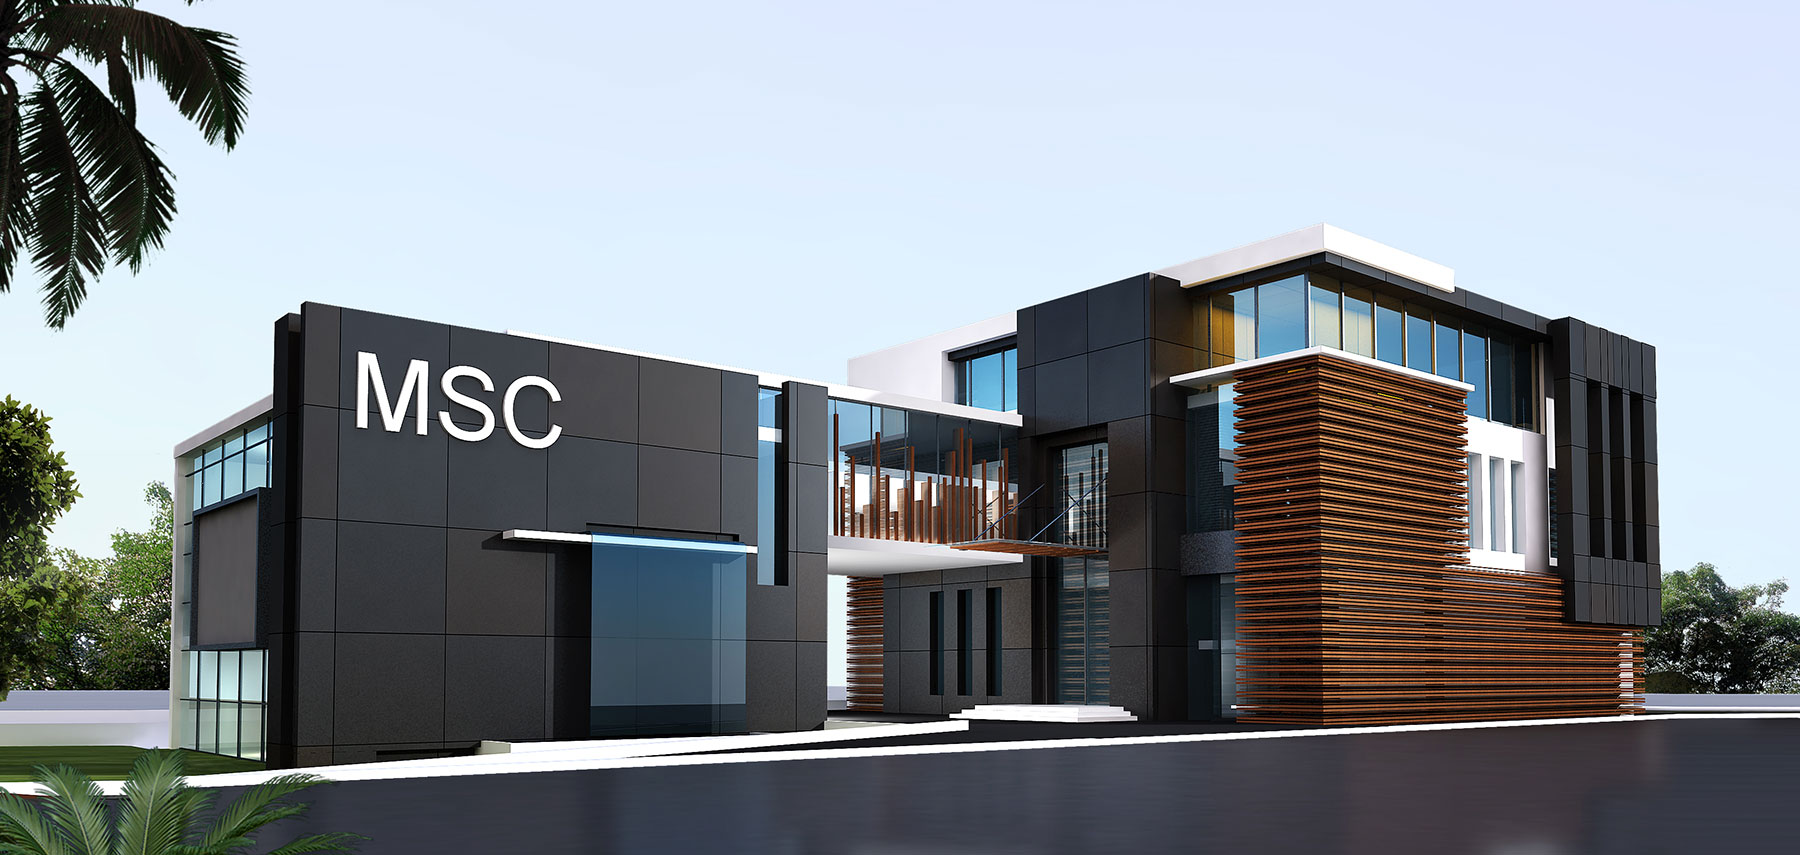 msc cruises sydney office